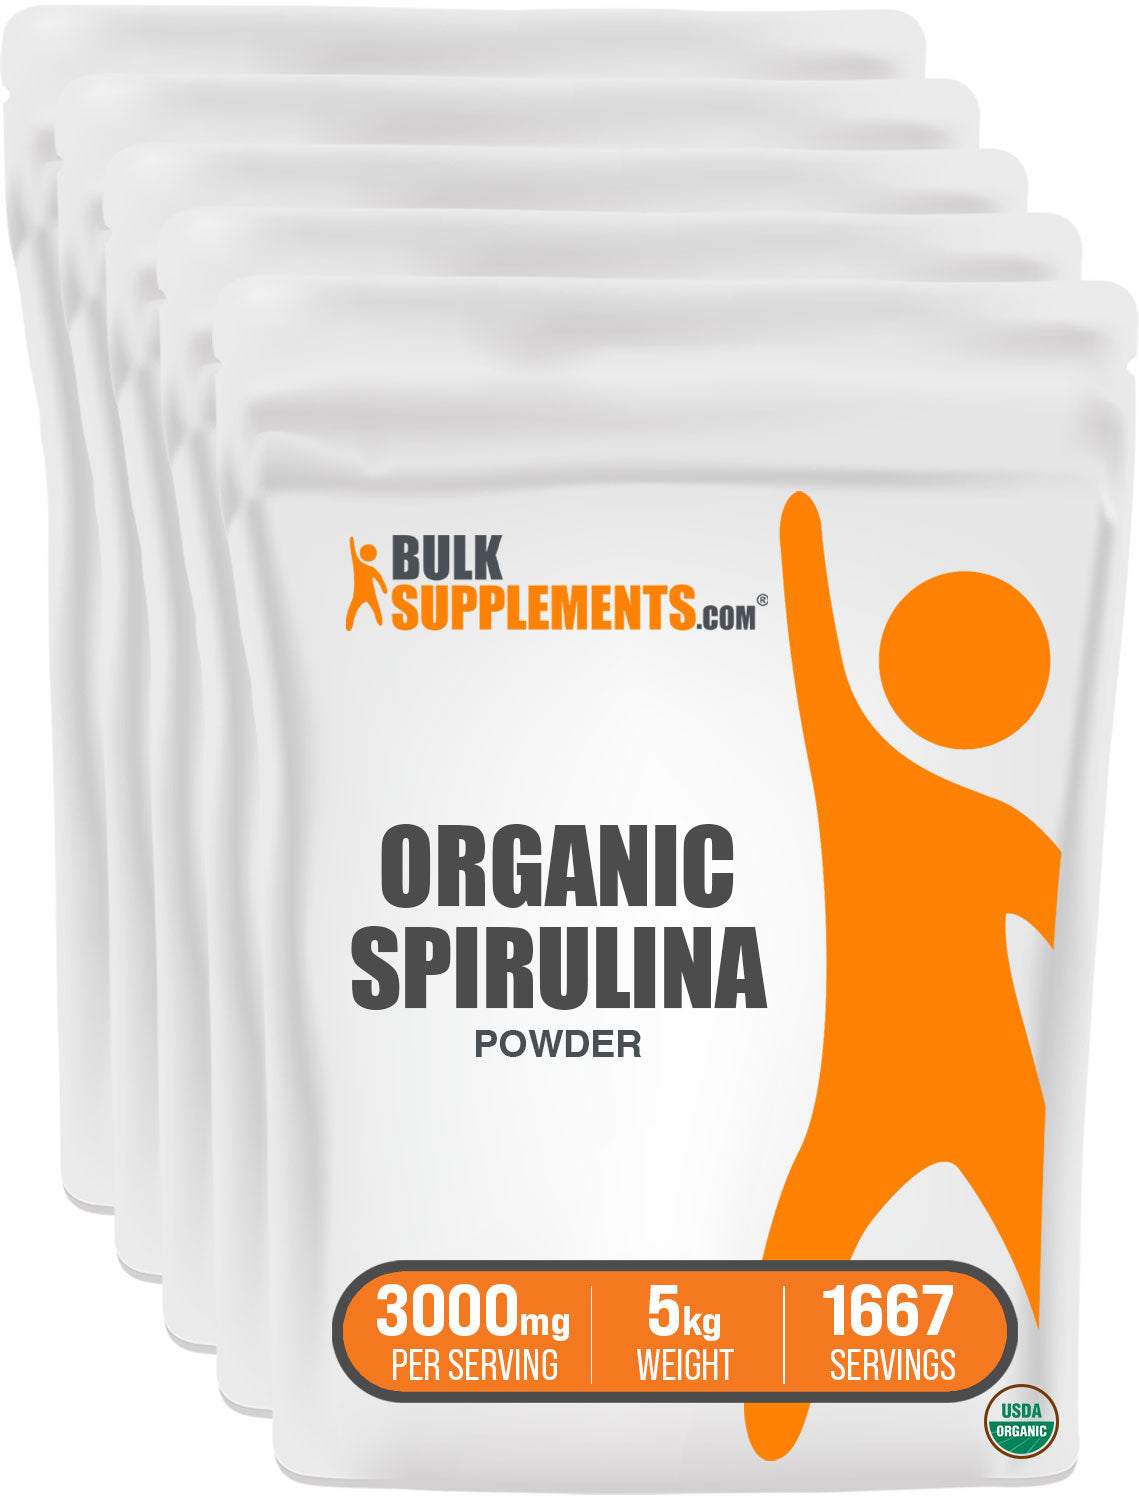  BulkSupplements.com Organic Spirulina Powder 5kg Bags